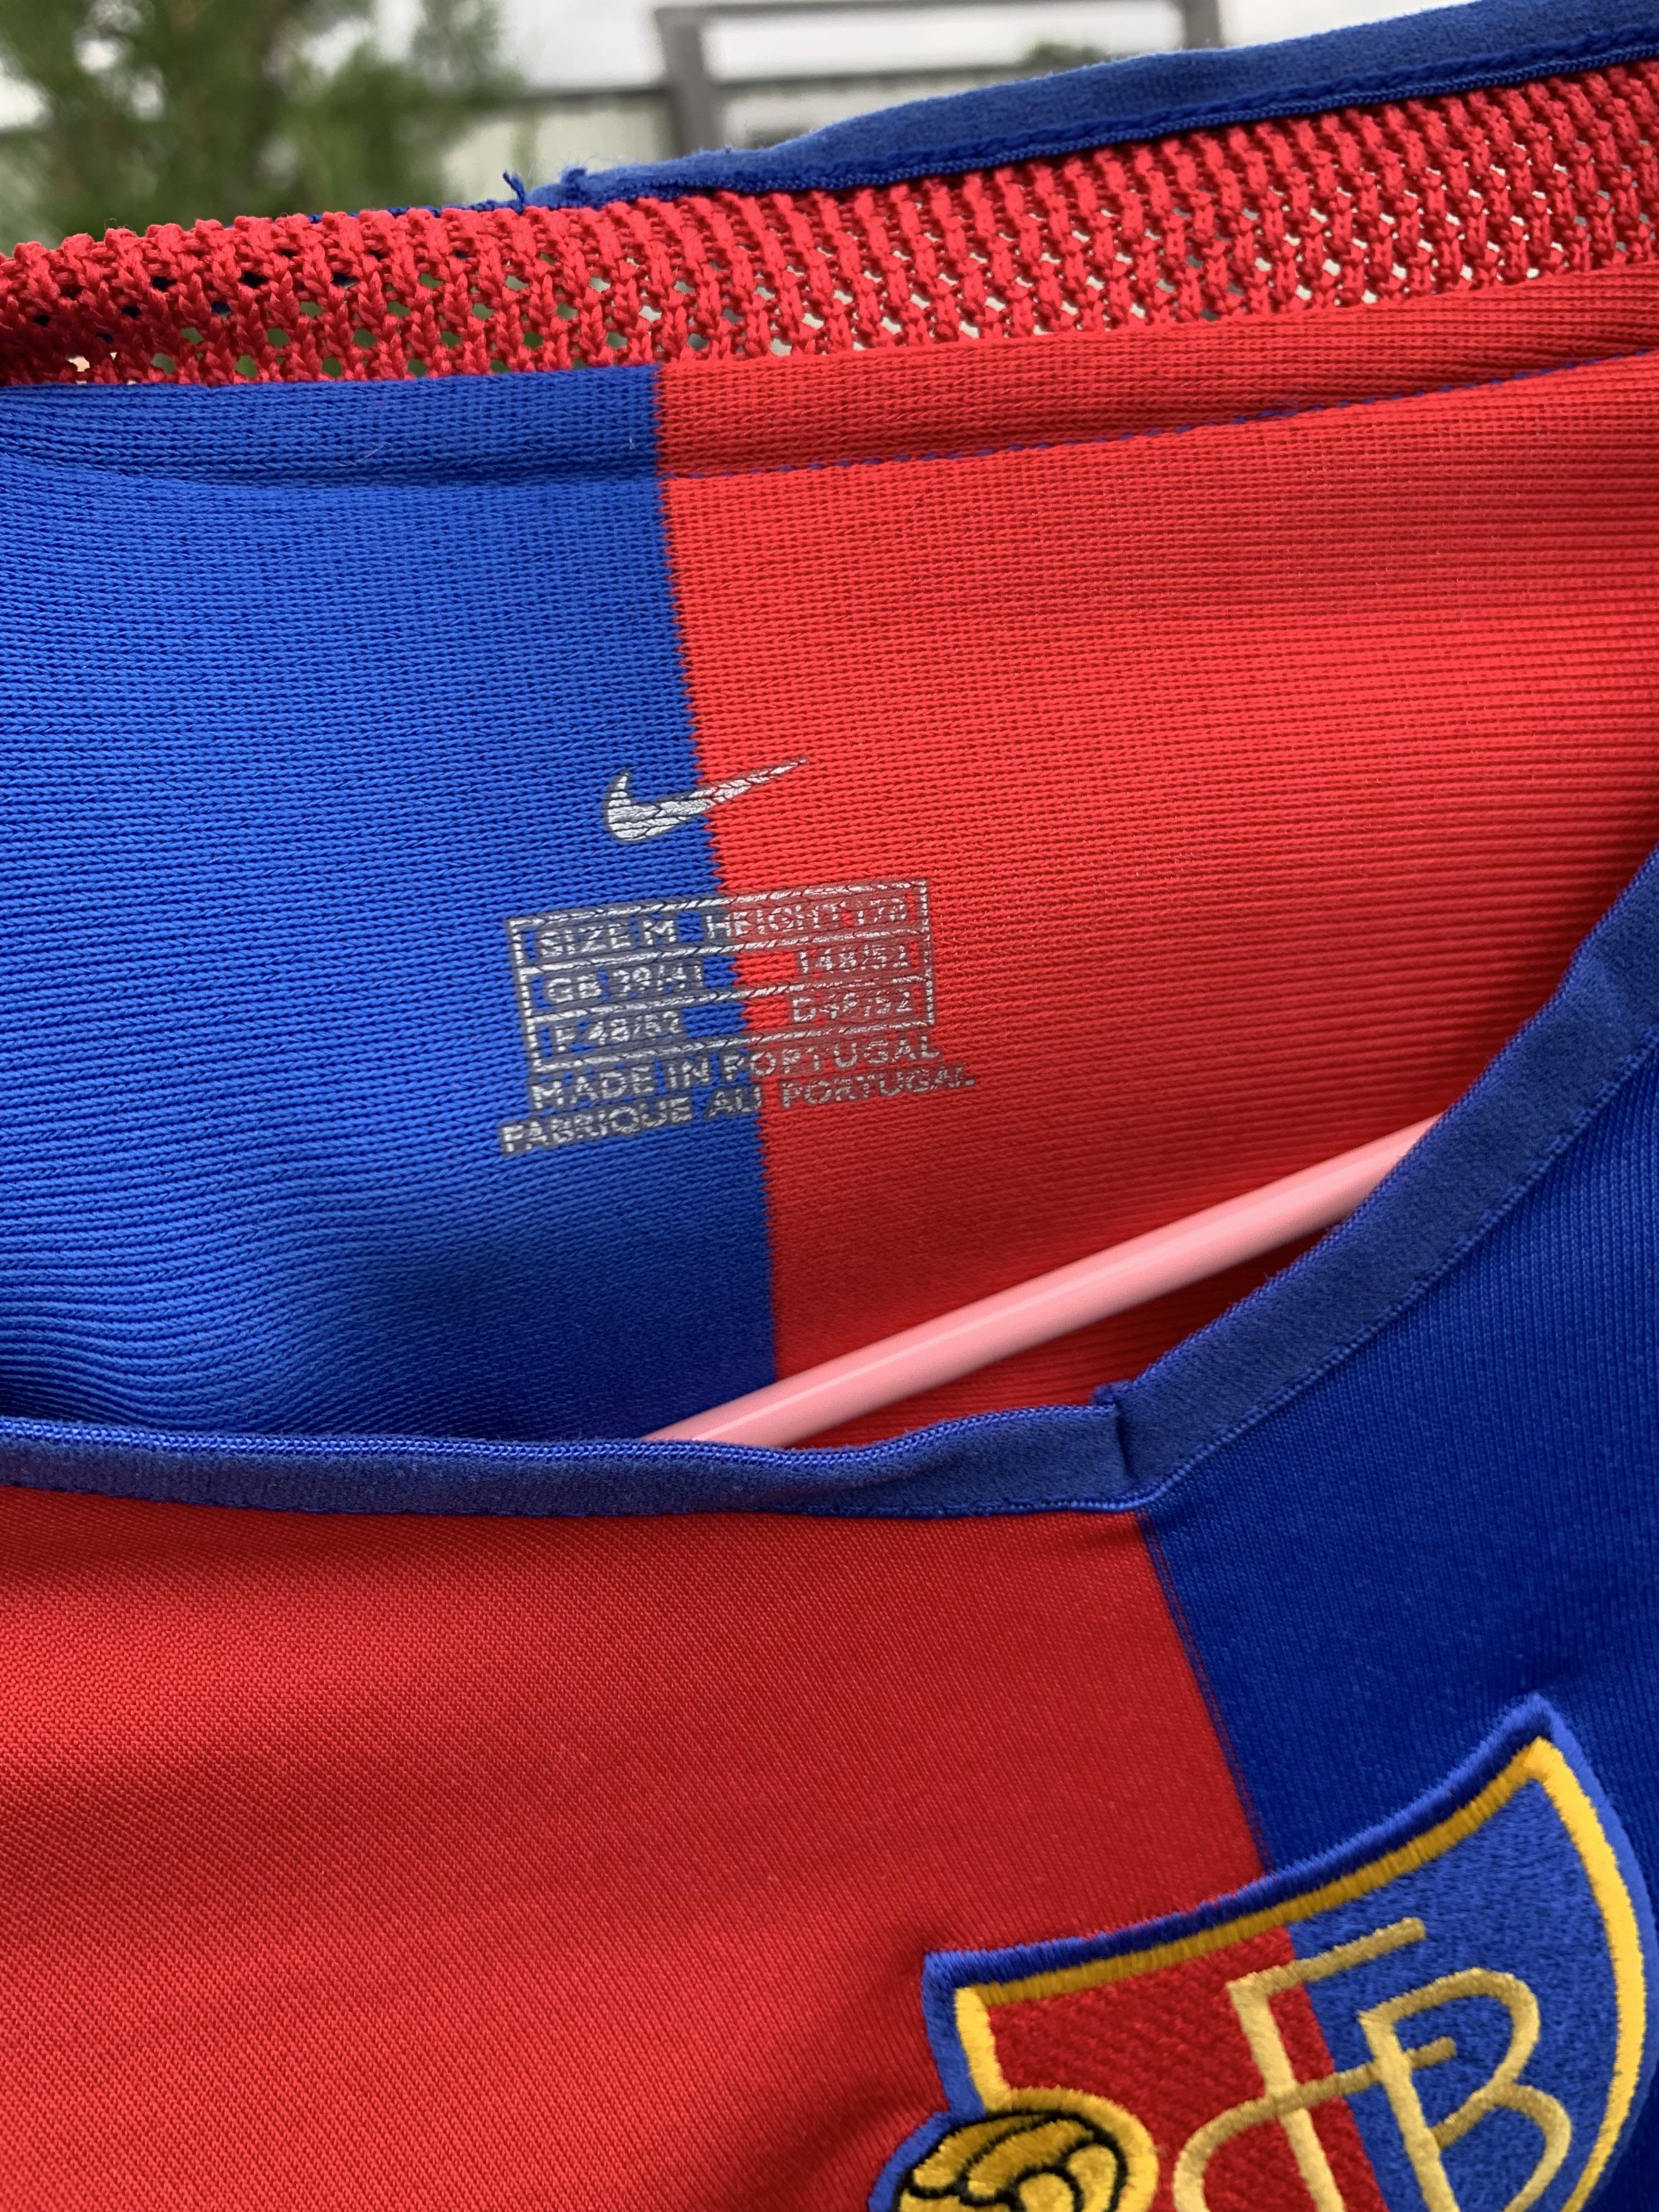 Nike FC Basel 2002-2004 vintage Football shirt Number 11 Size US M / EU 48-50 / 2 - 7 Thumbnail